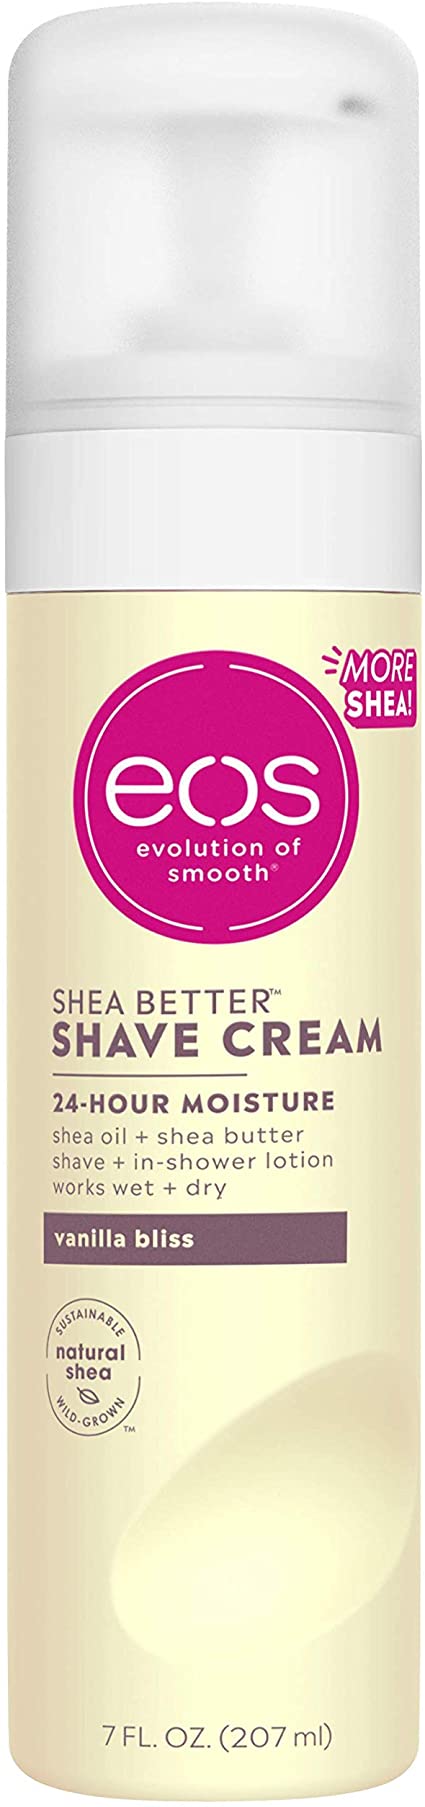 EOS Ultra Moisturizing Shave Cream, Vanilla Bliss - 7 oz